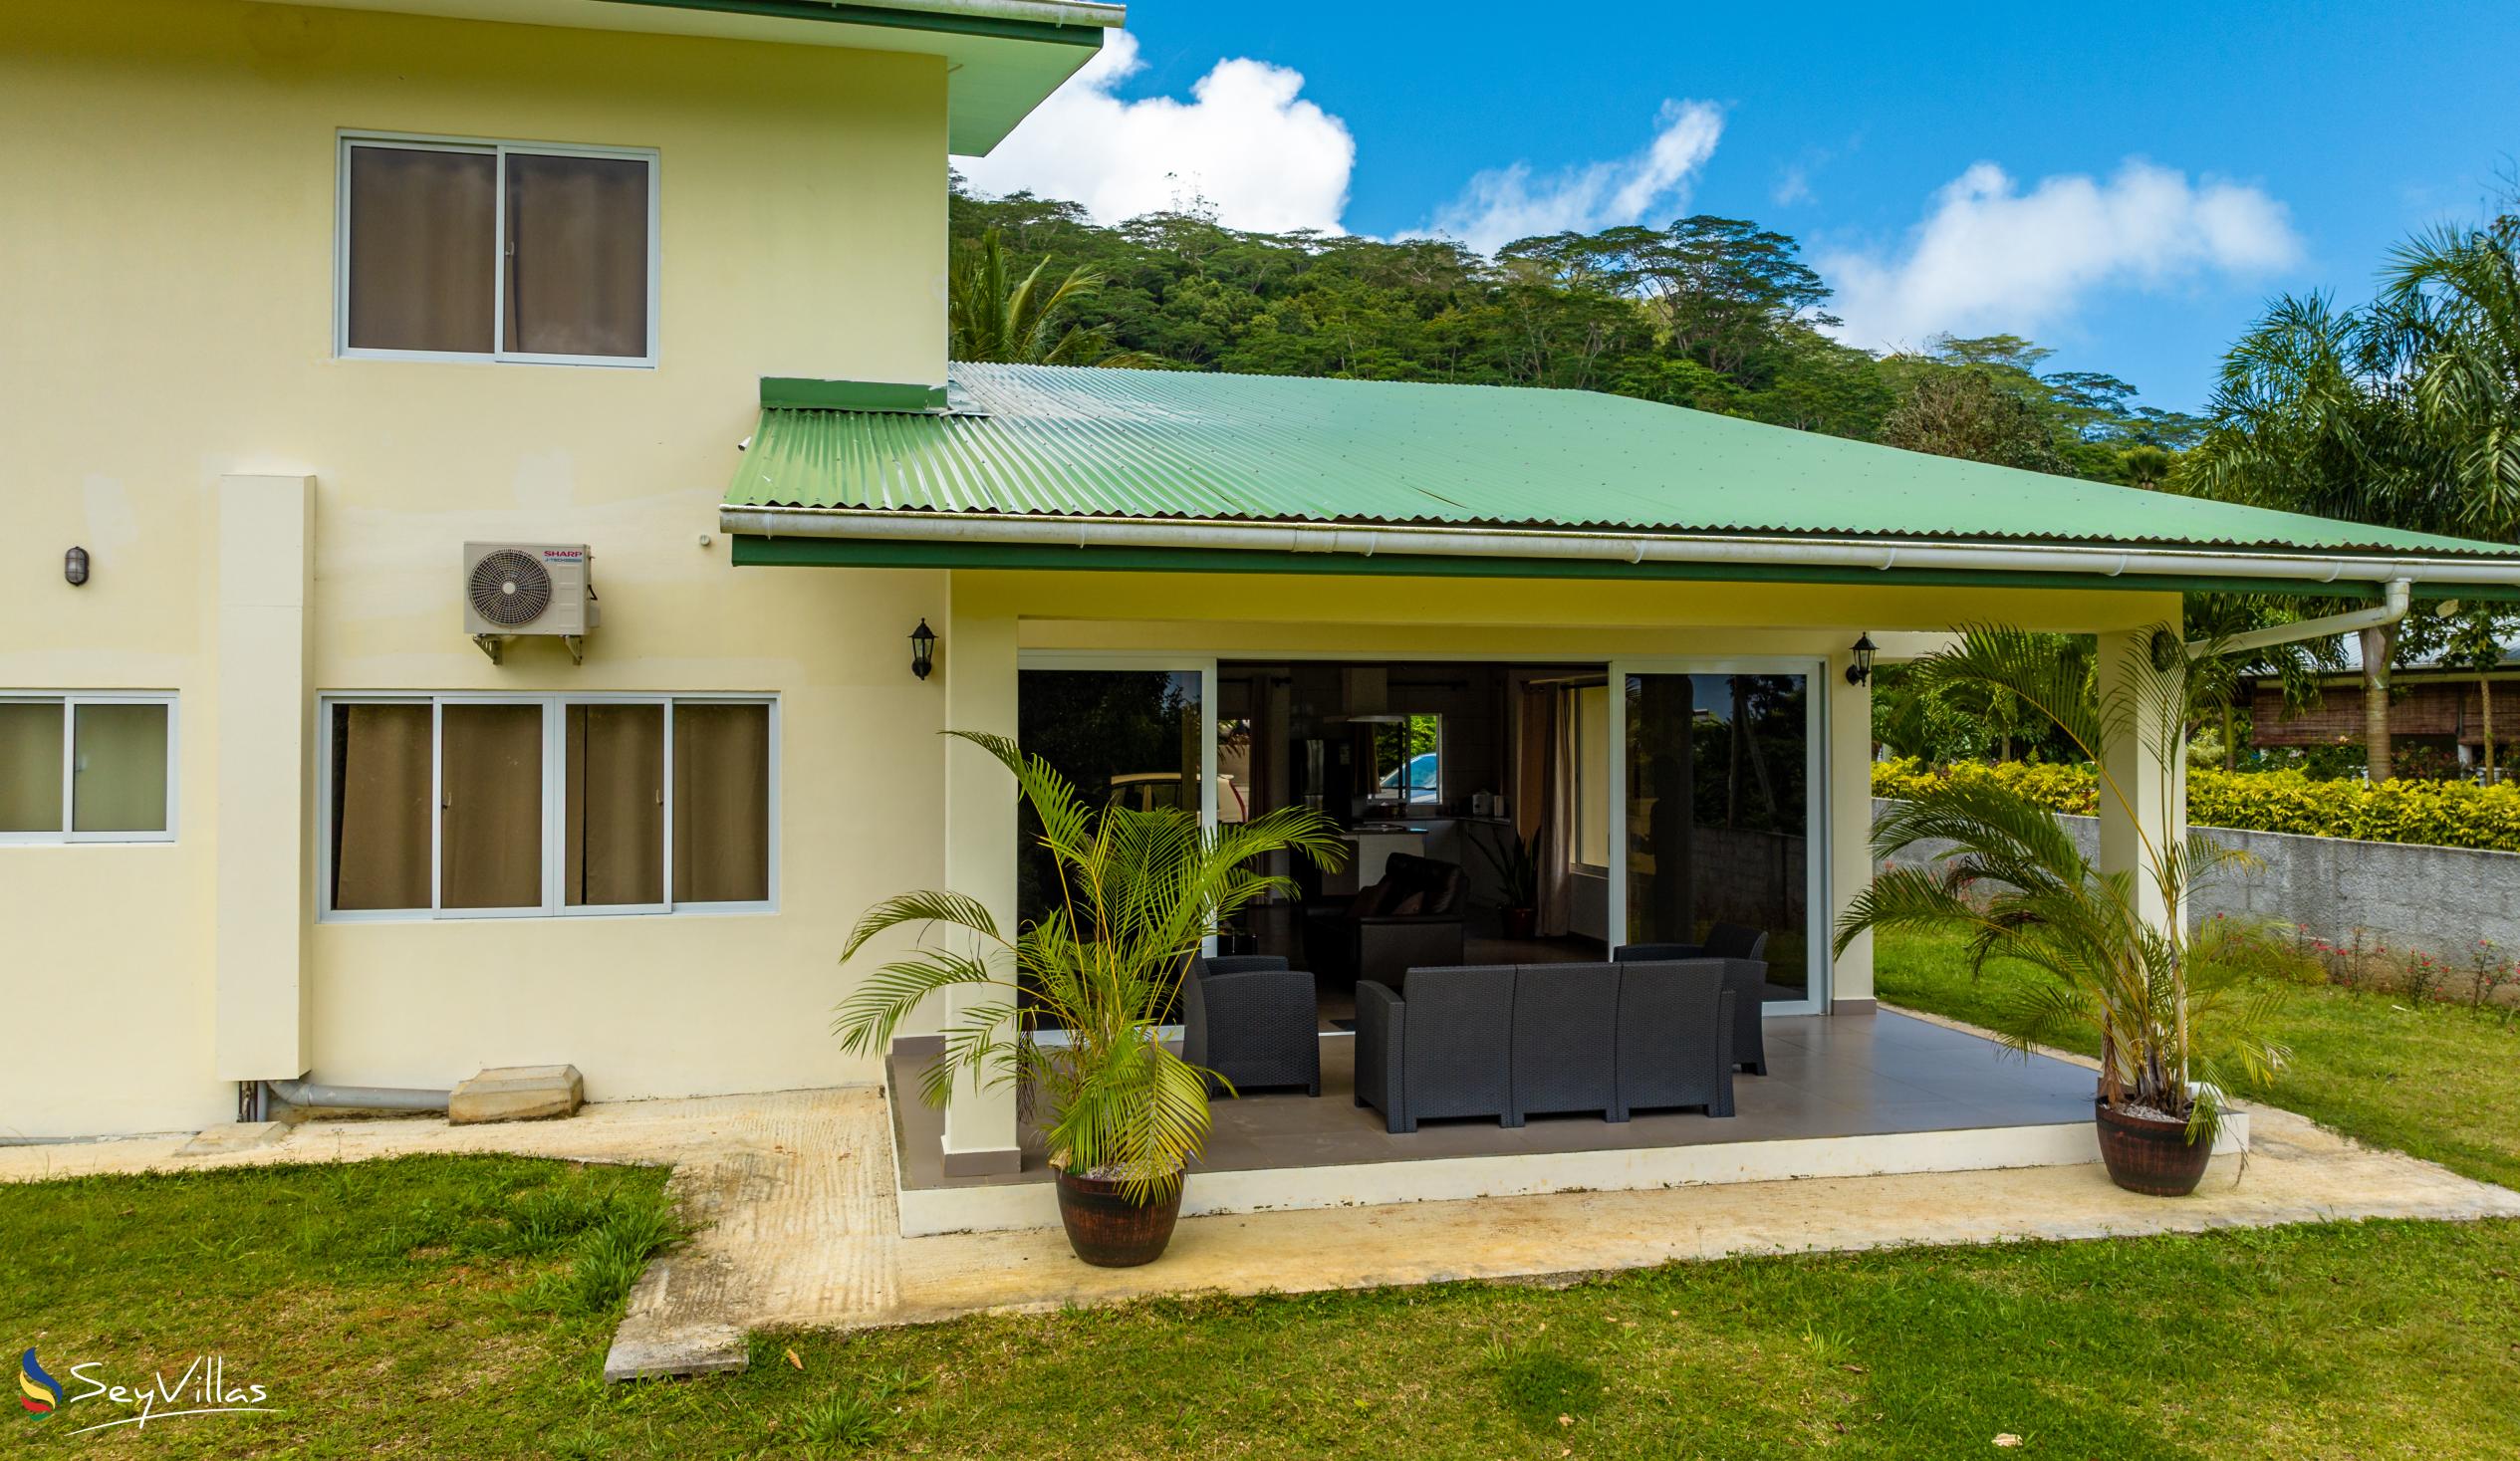 Photo 2: Maison Dora - Outdoor area - Mahé (Seychelles)